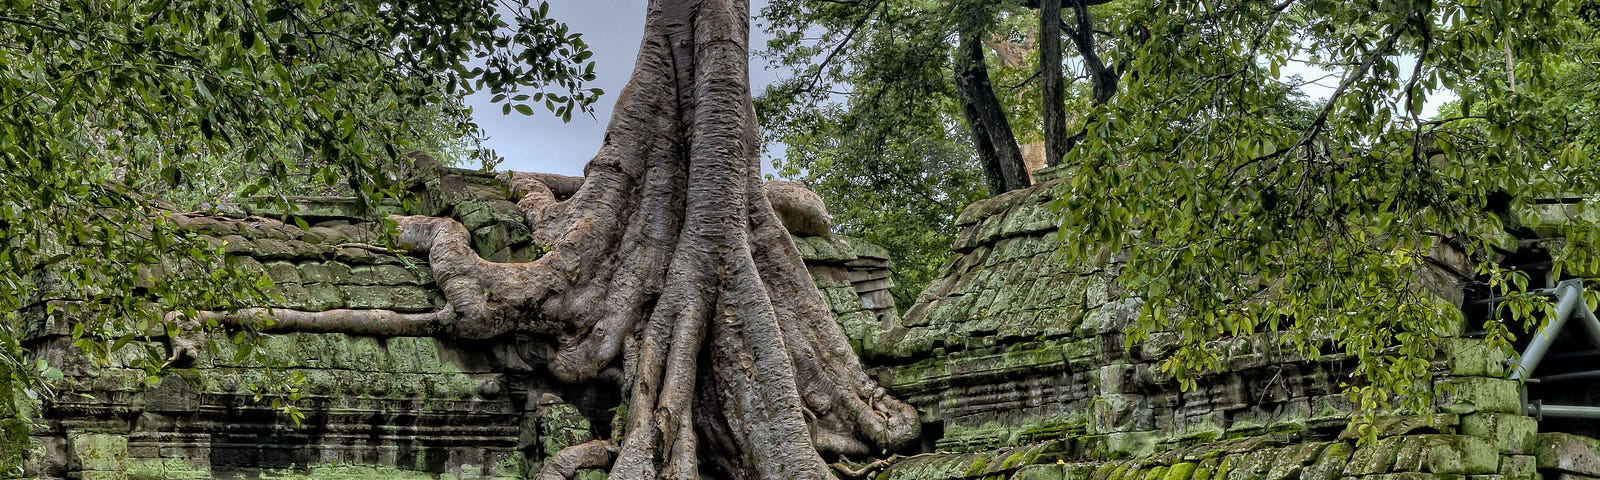 Giant tree grows through temple ruin